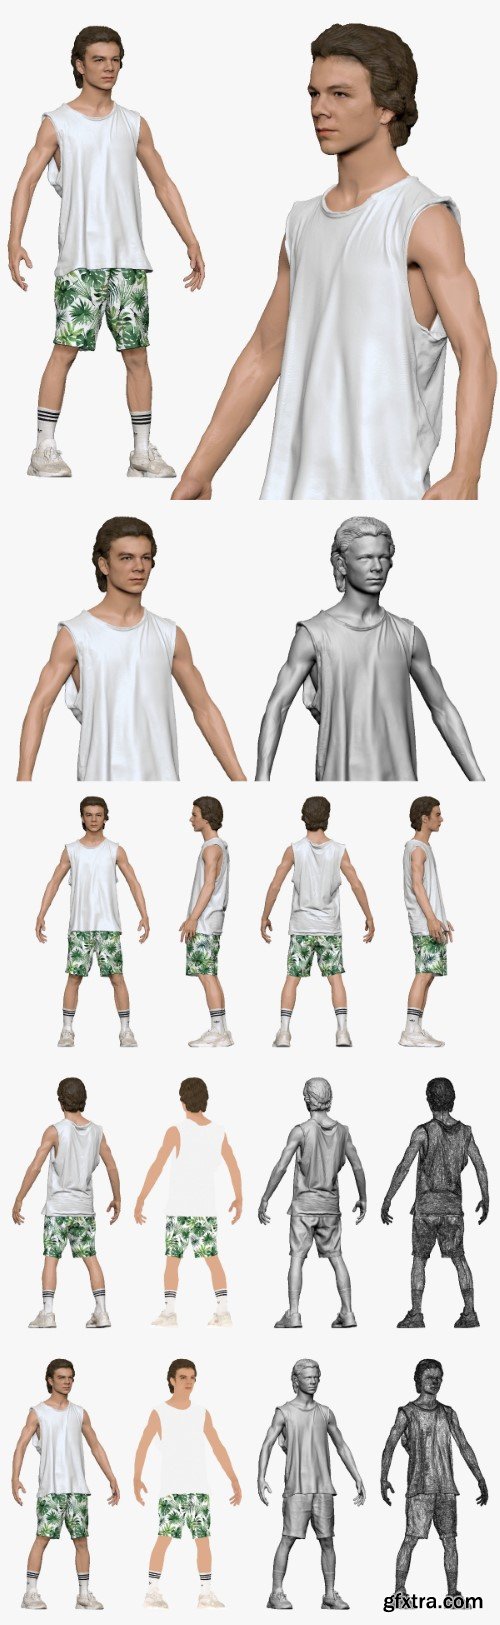 001247 junior boy in tank top palm shirts 3D Model